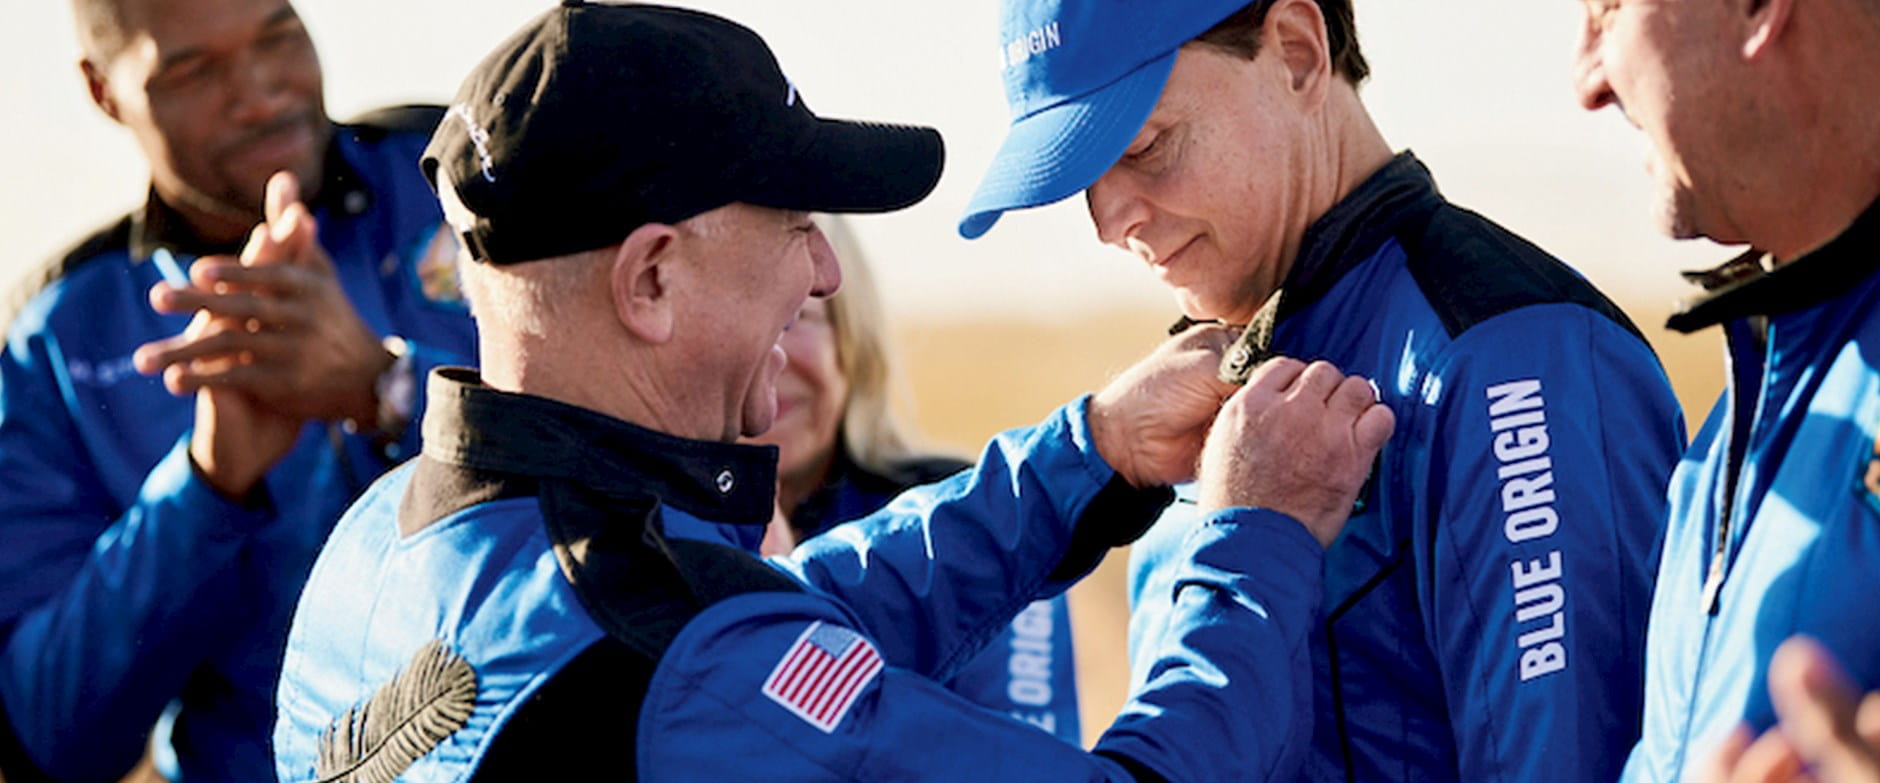 Members of Blue Origin space exploration receiving pins on their uniform